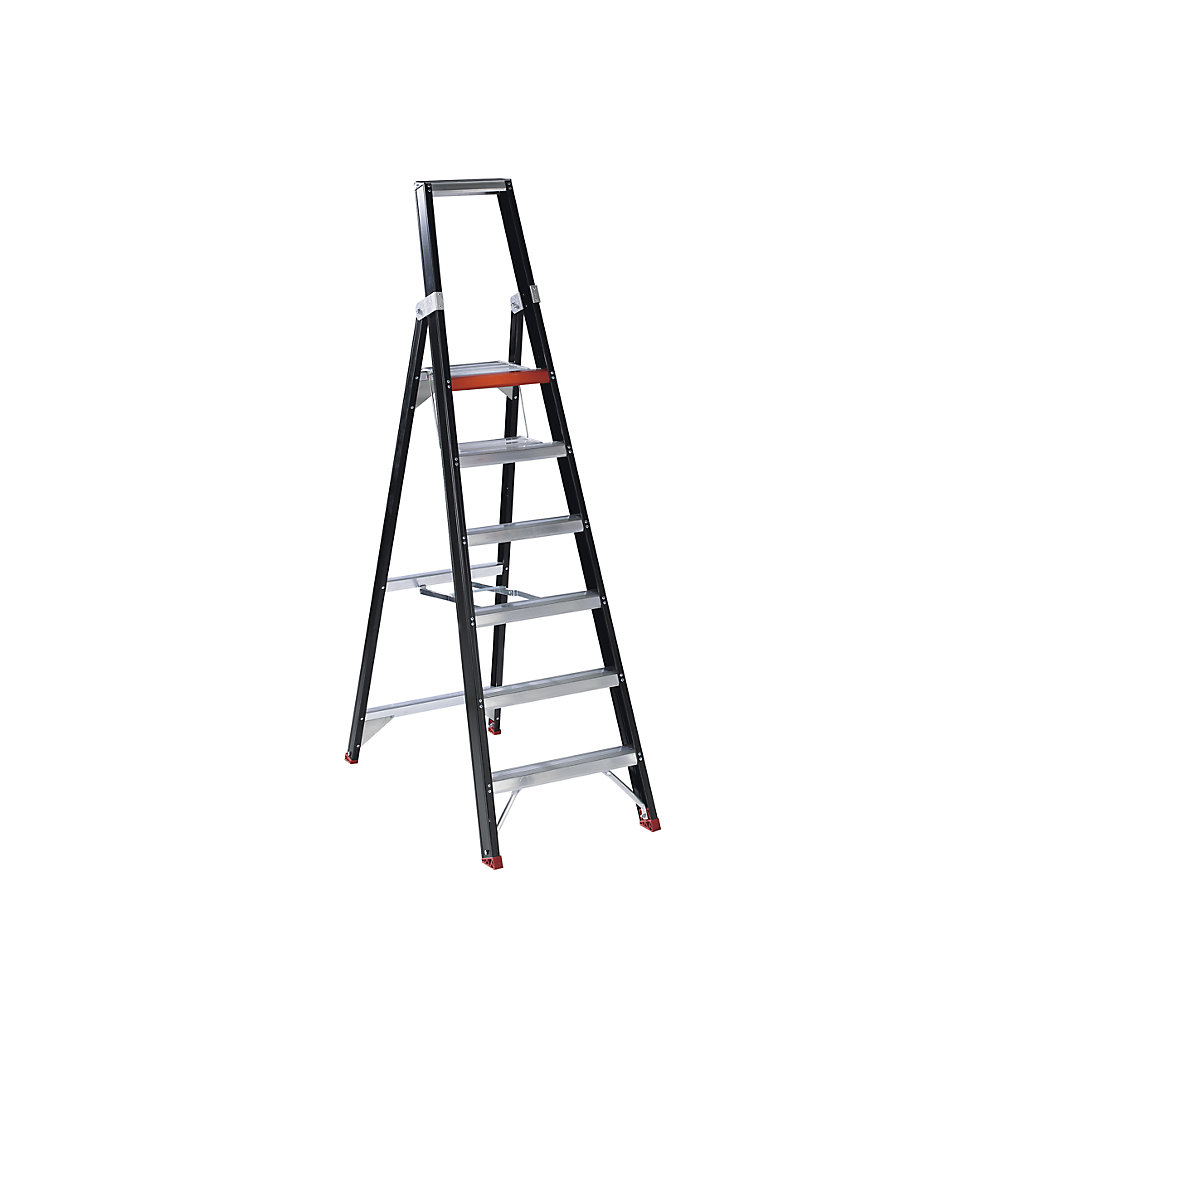 Safety step ladder – Altrex, single sided access, 6 steps incl. platform-1